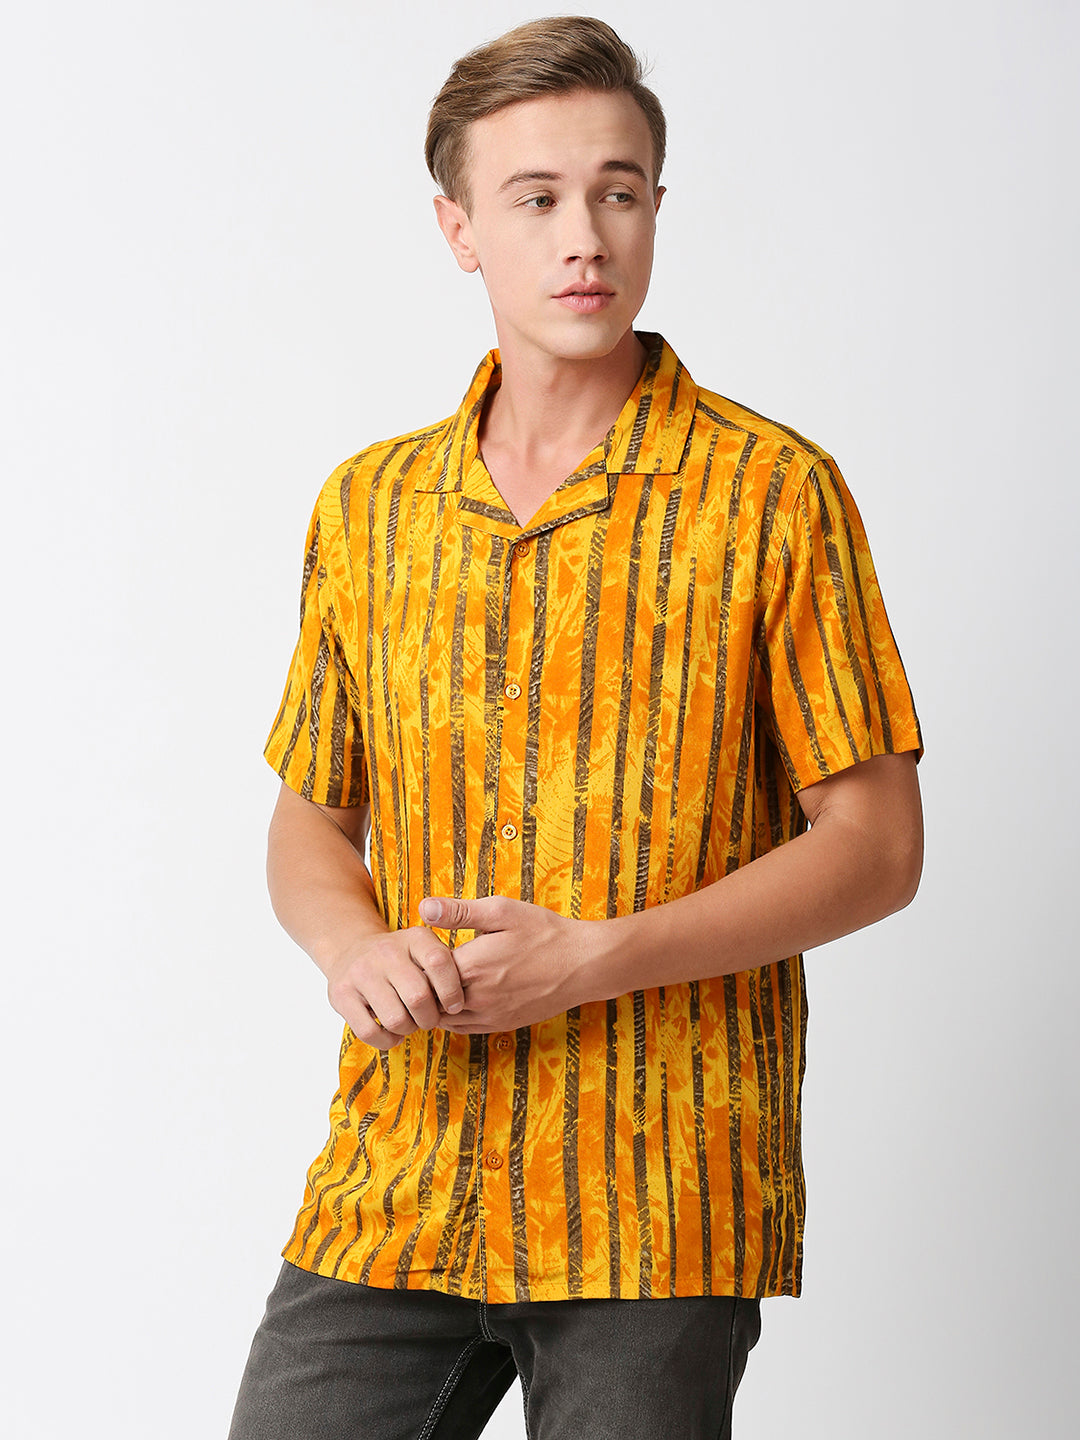 Fantasia Yellow Vertical Stripes Shirt